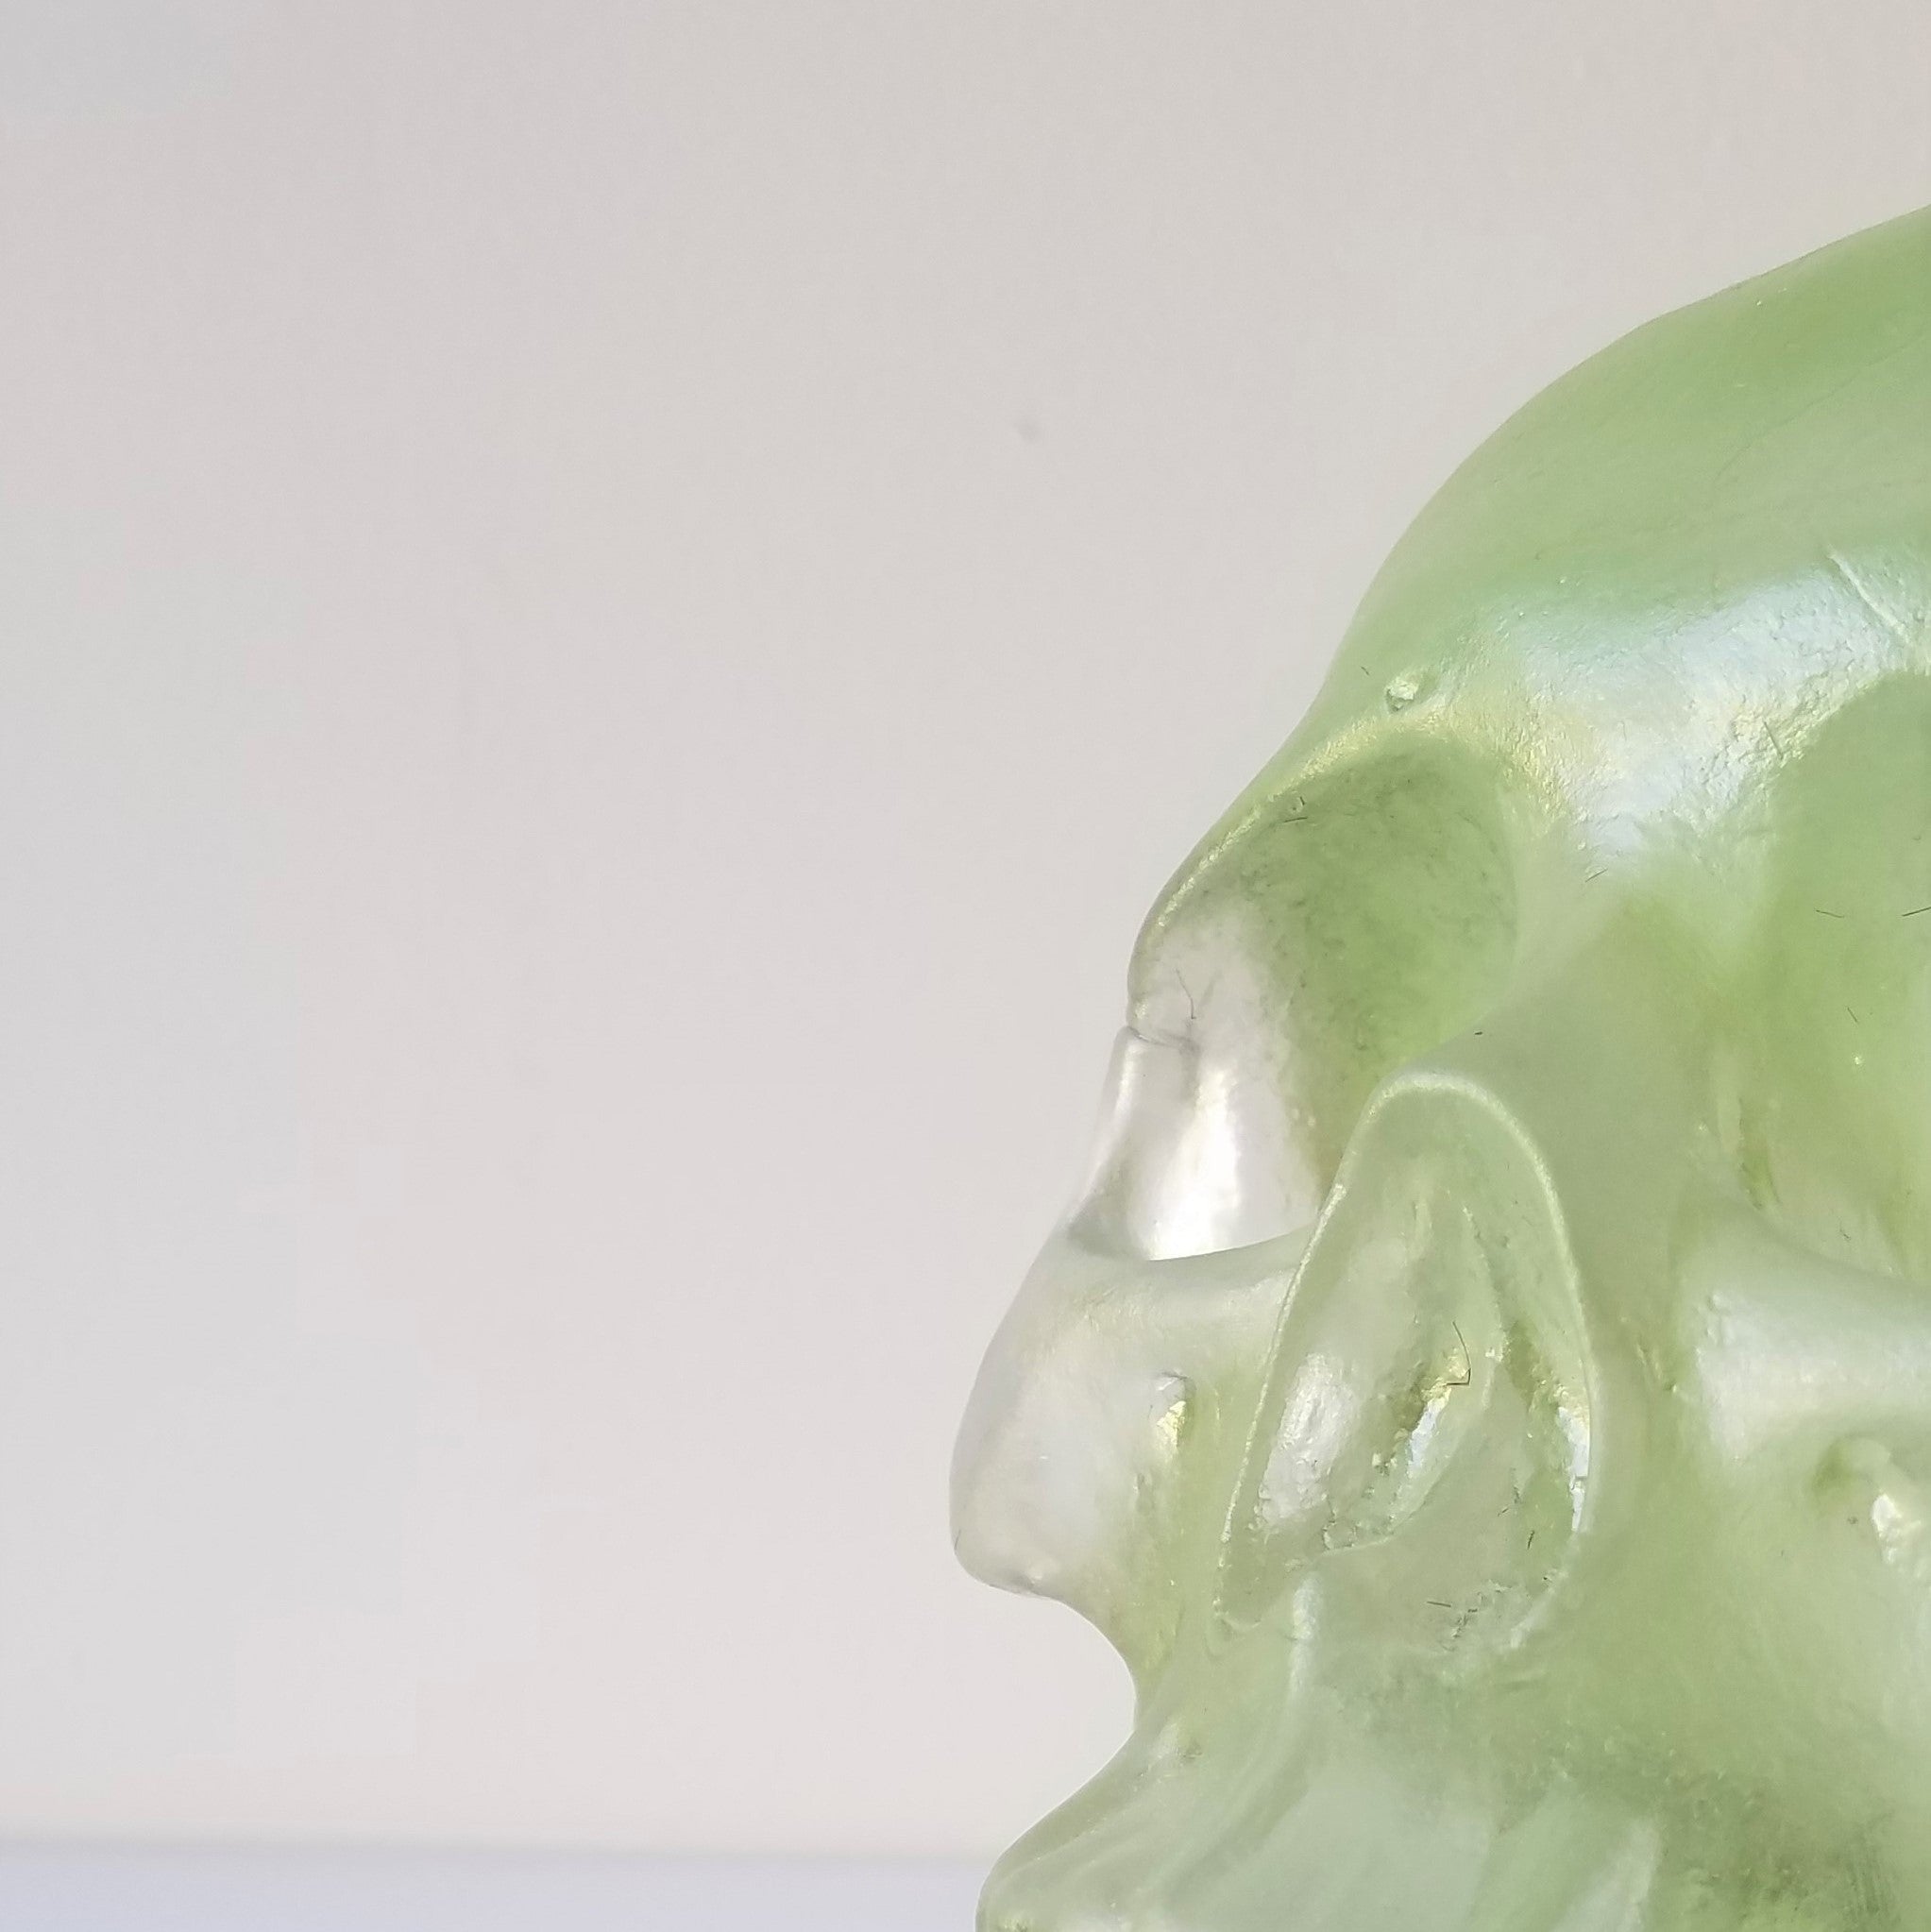 Paul Marioni Test Sand-Casted Glass Skull